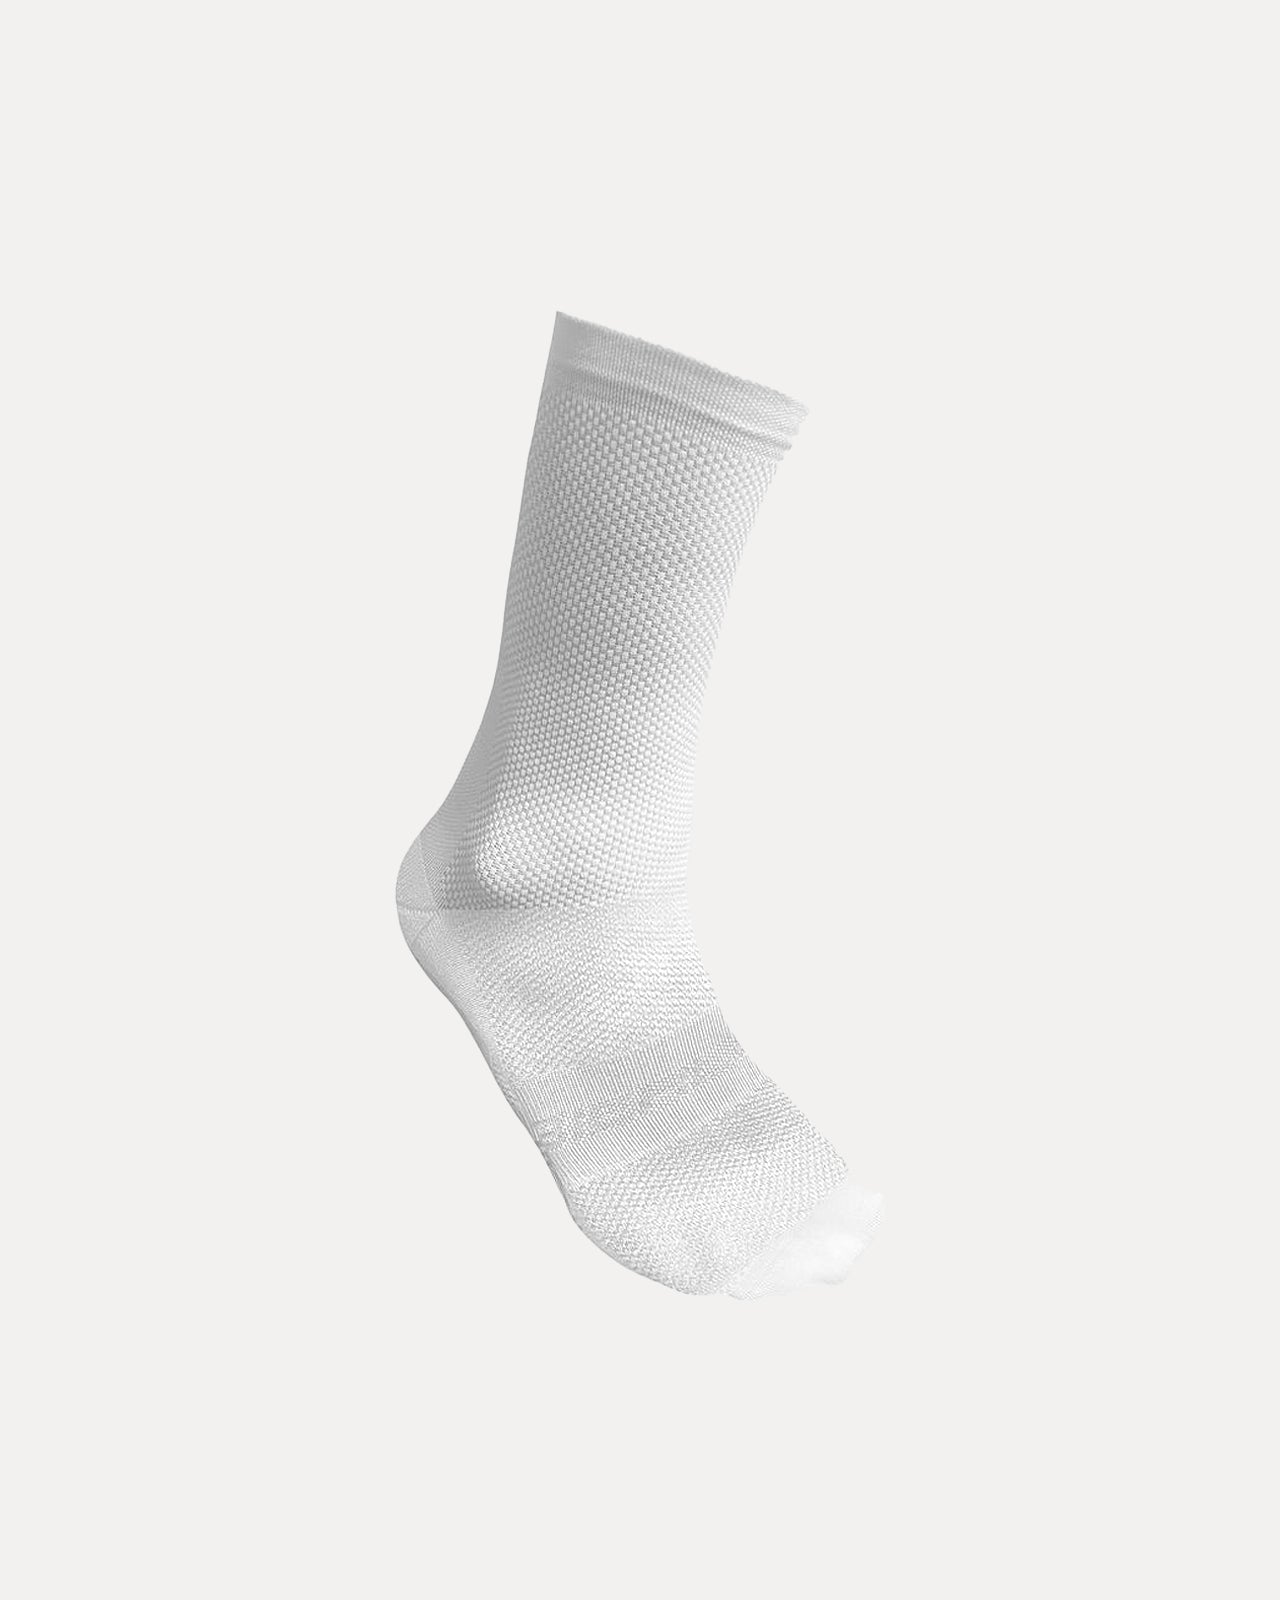 Statement Socks - White